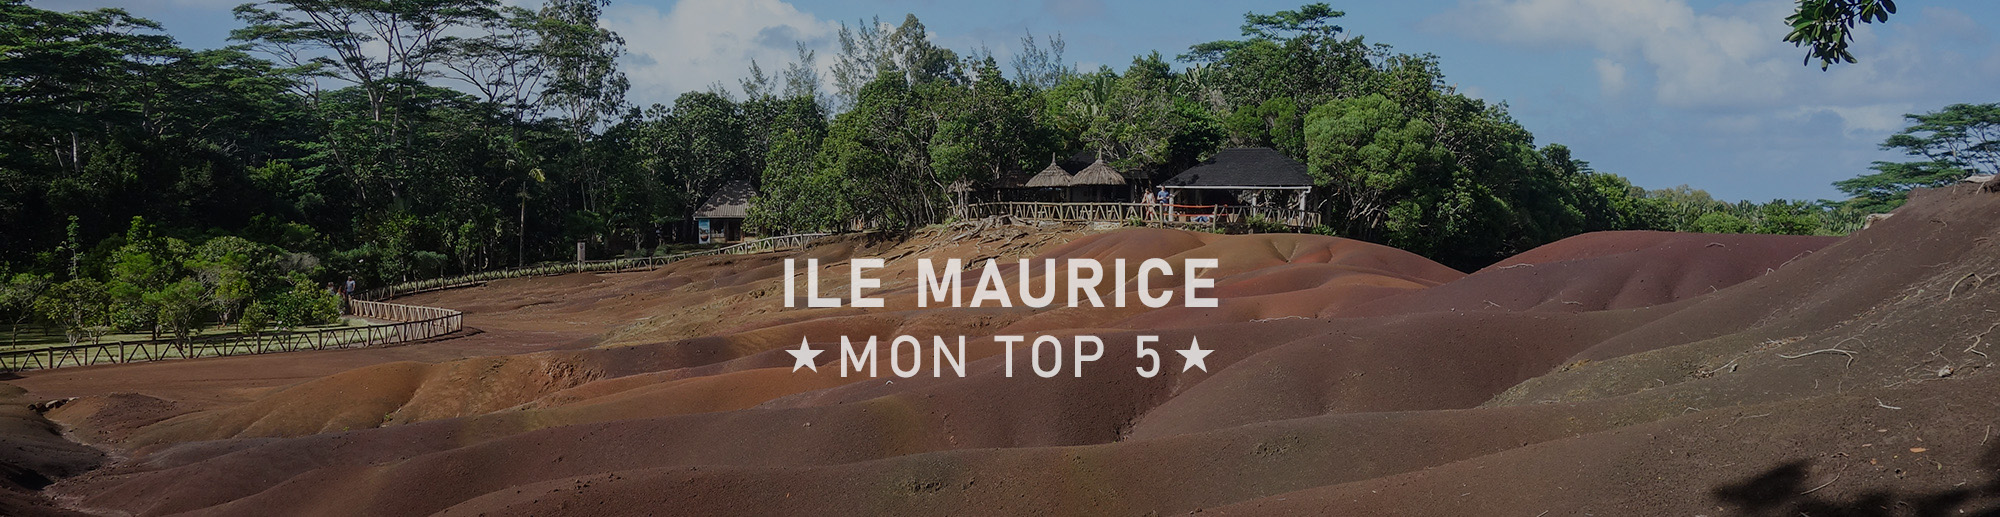 Ile Maurice - Mon top 5